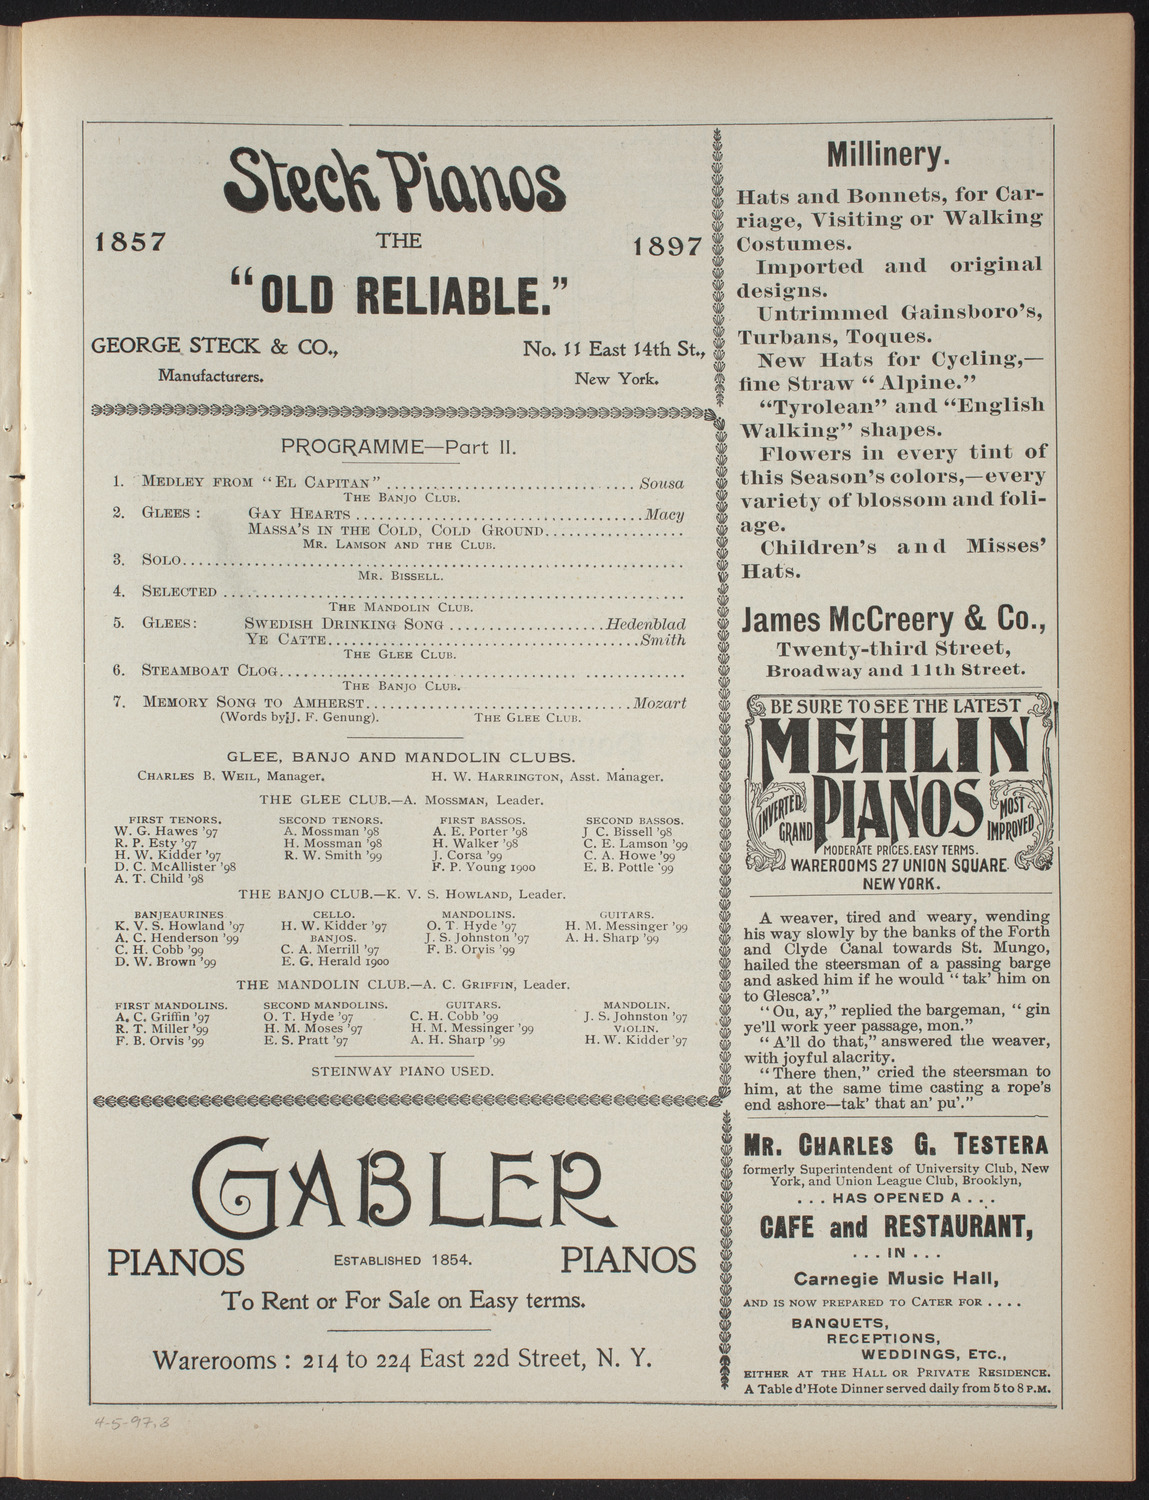 Amherst College Musical Association: Glee, Banjo, and Mandolin Clubs, April 5, 1897, program page 5